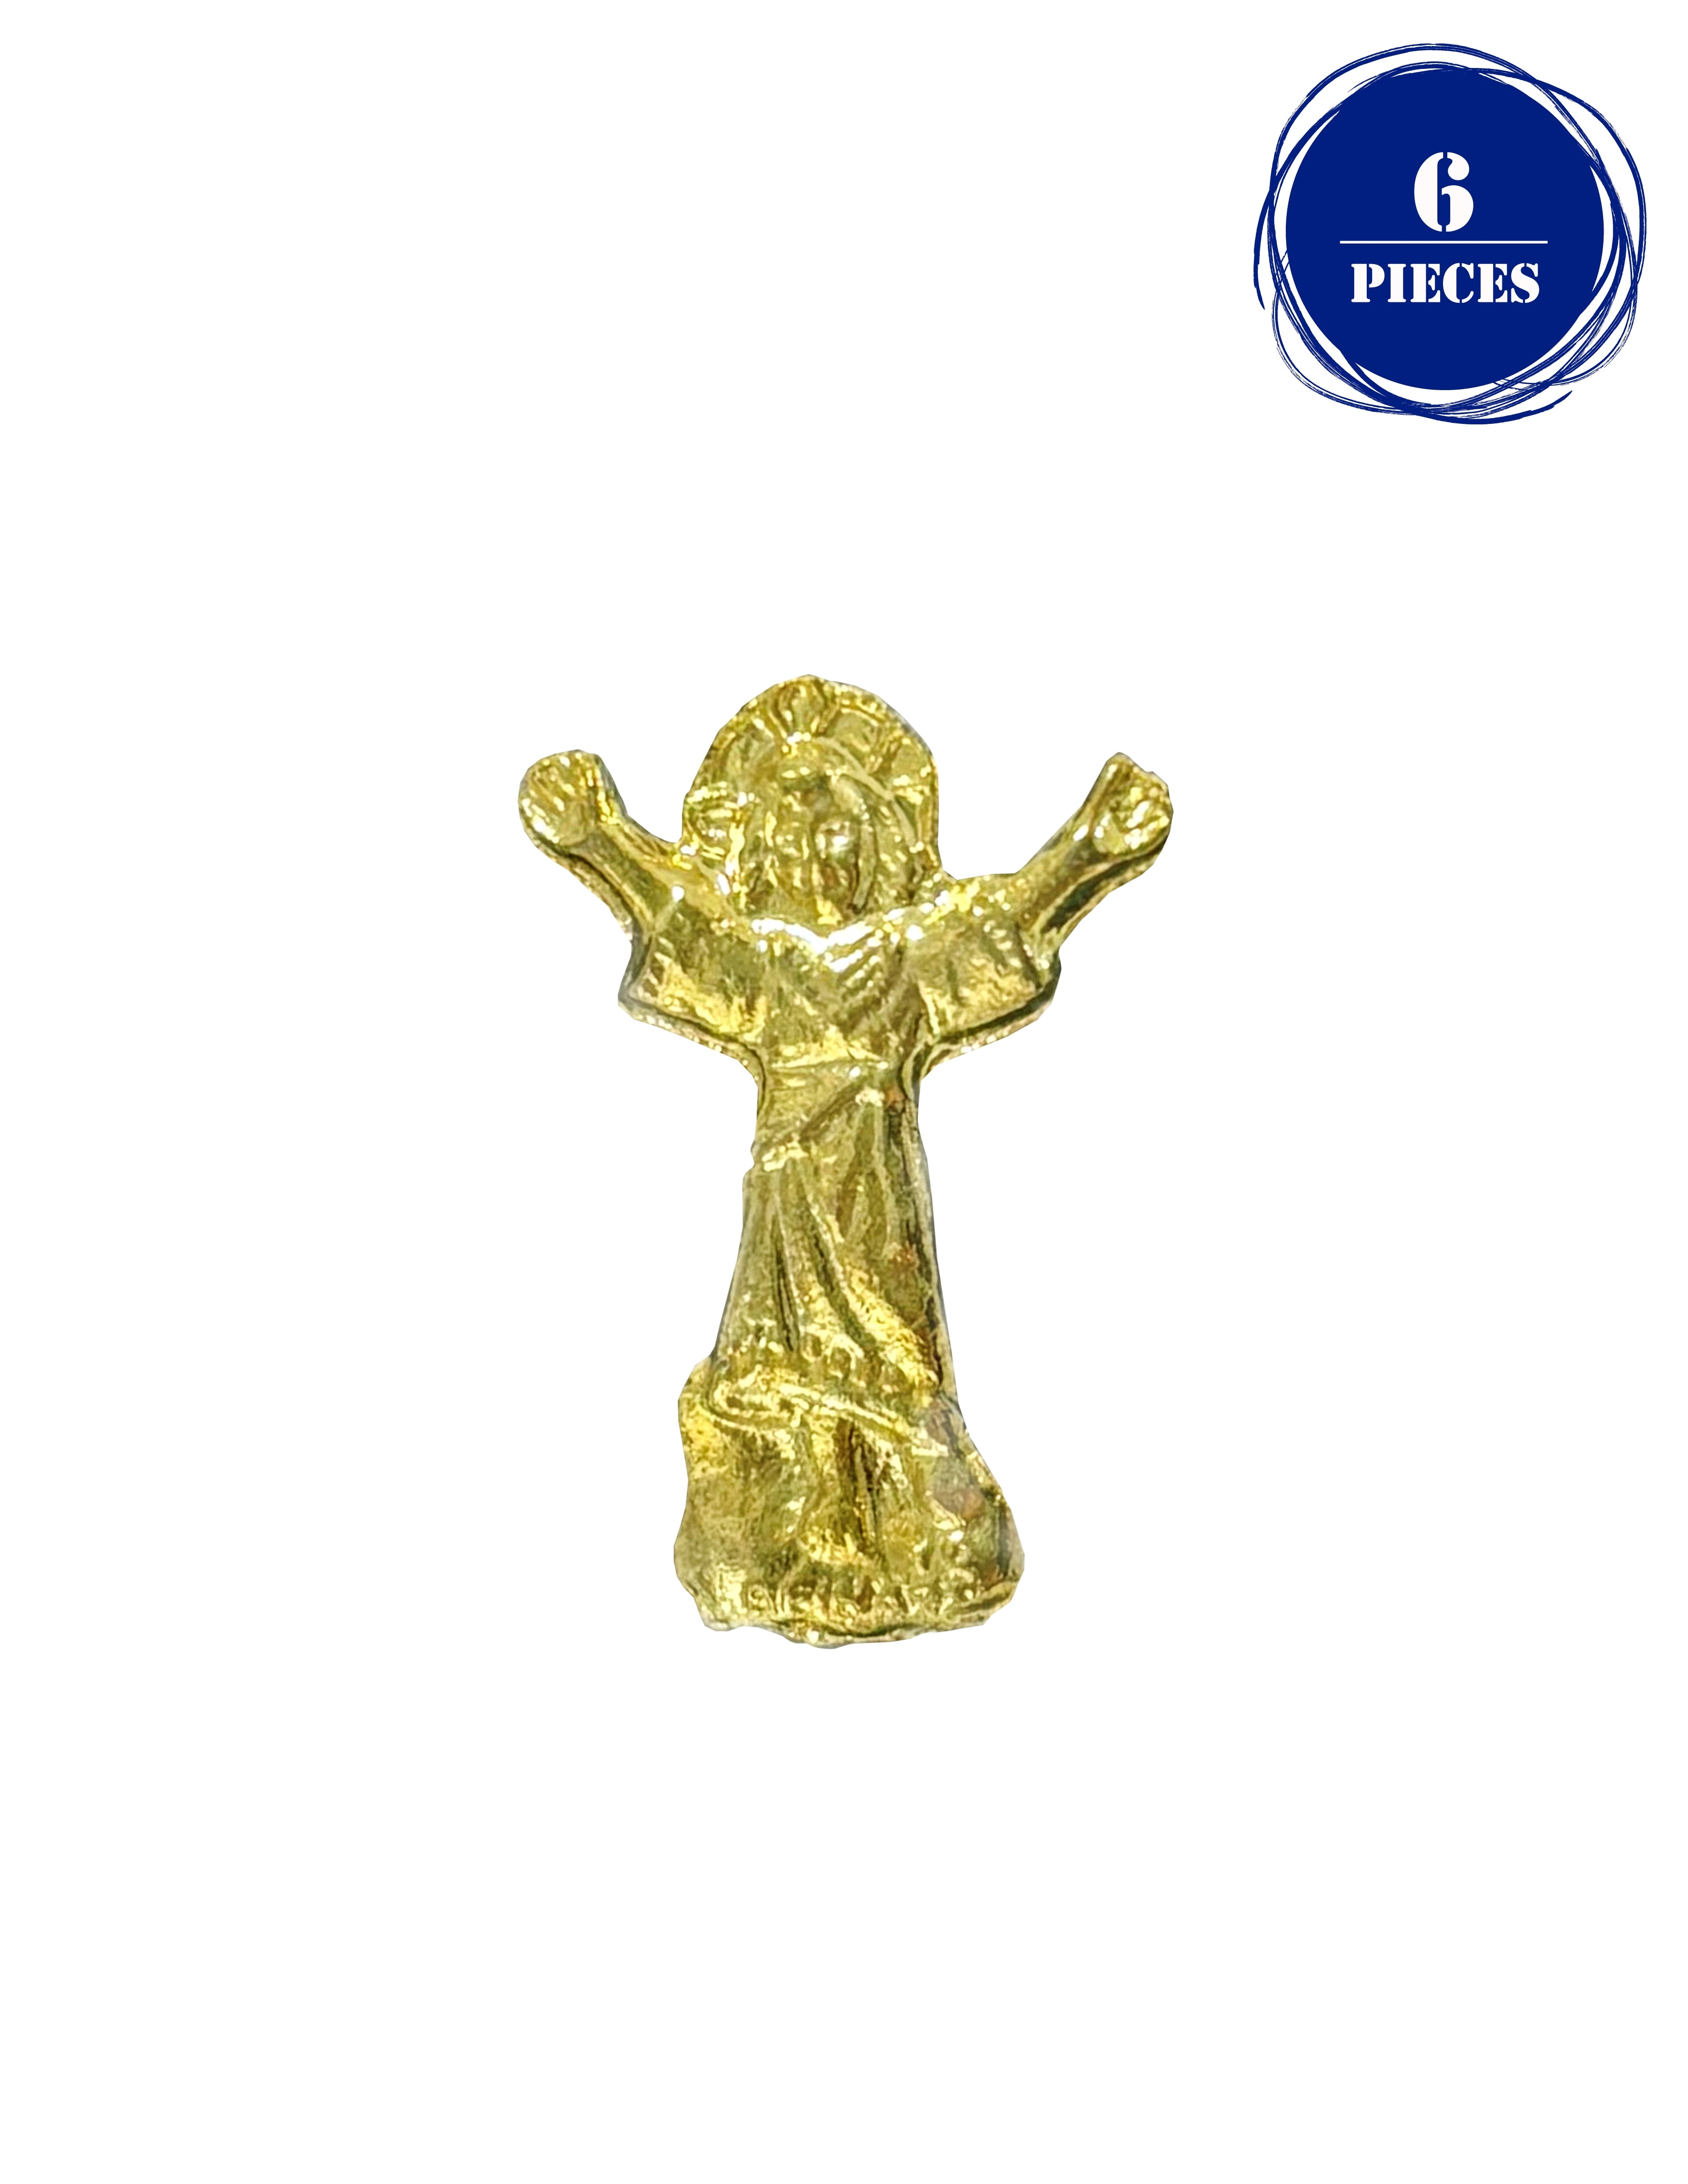 Gold accent catholics lapel pins